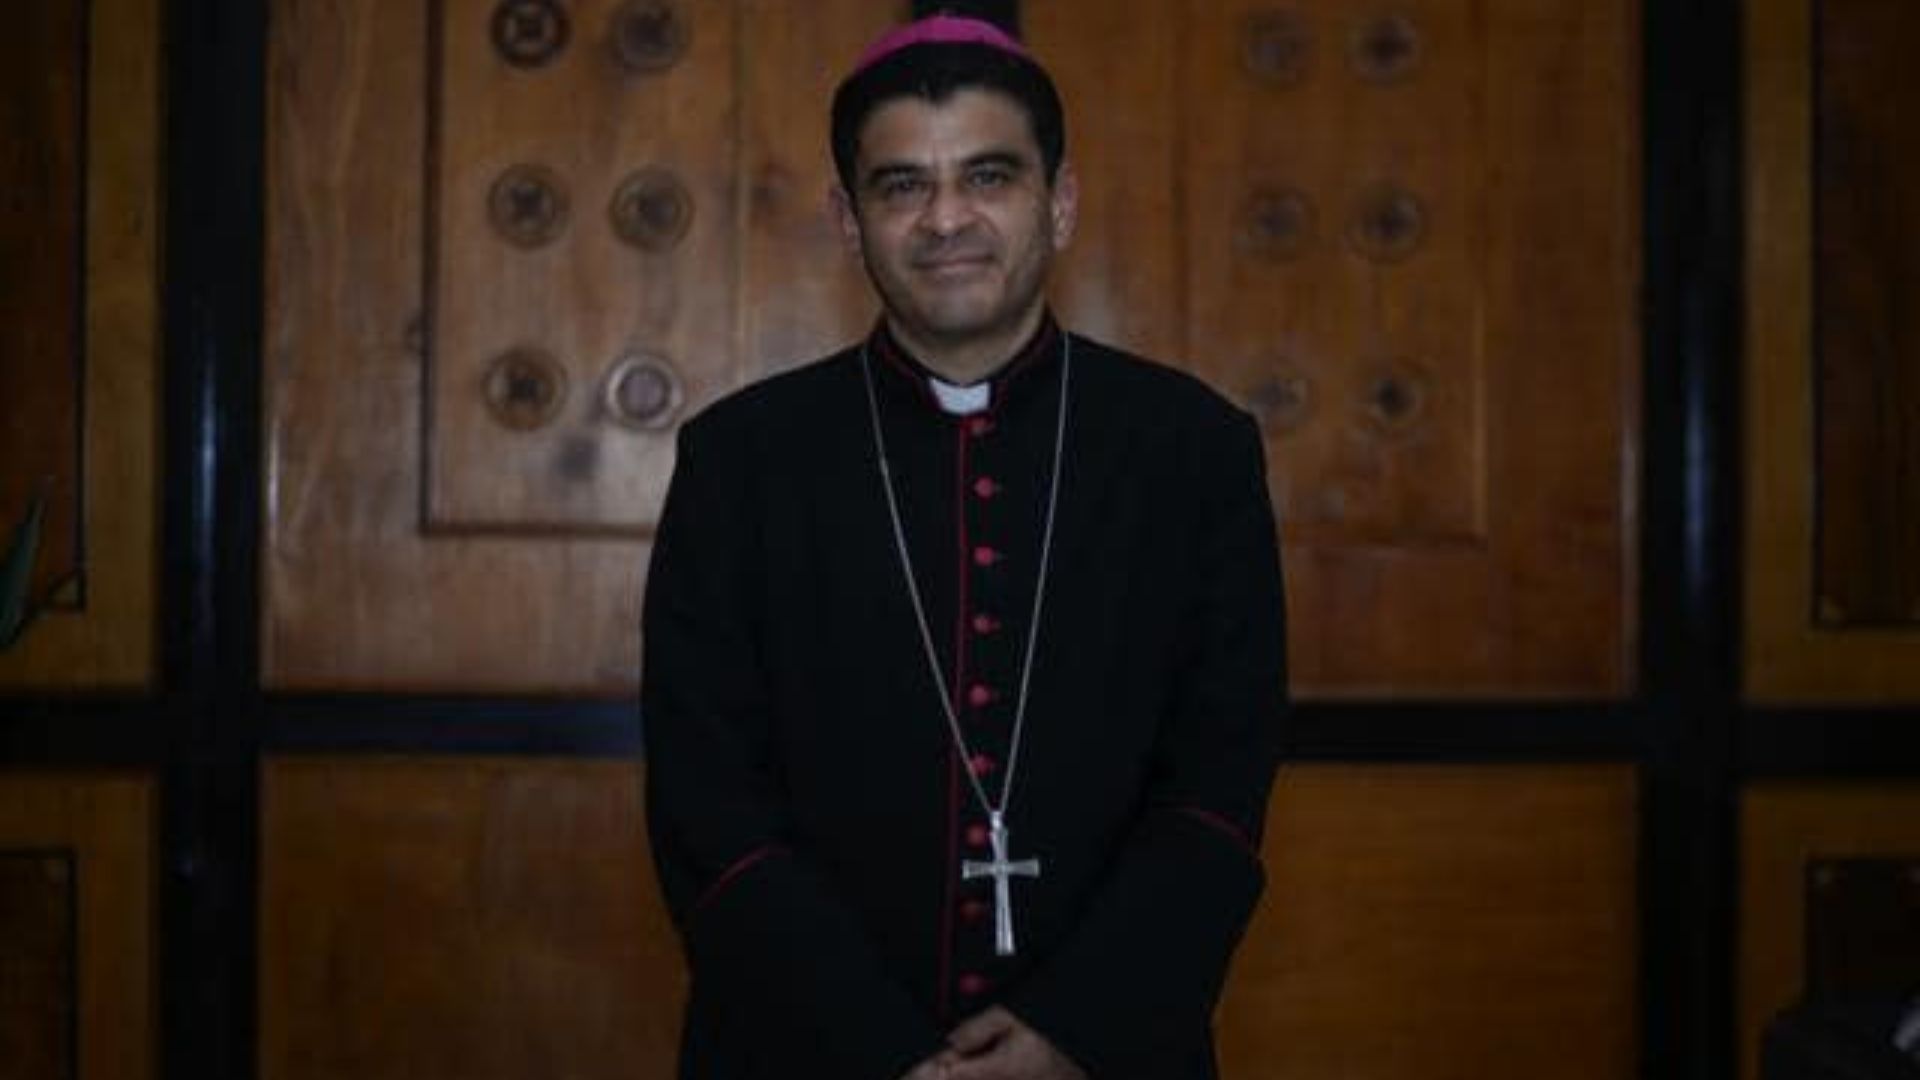 “Where is my brother Monsignor Rolando Álvarez?” asks Bishop of Costa Rica